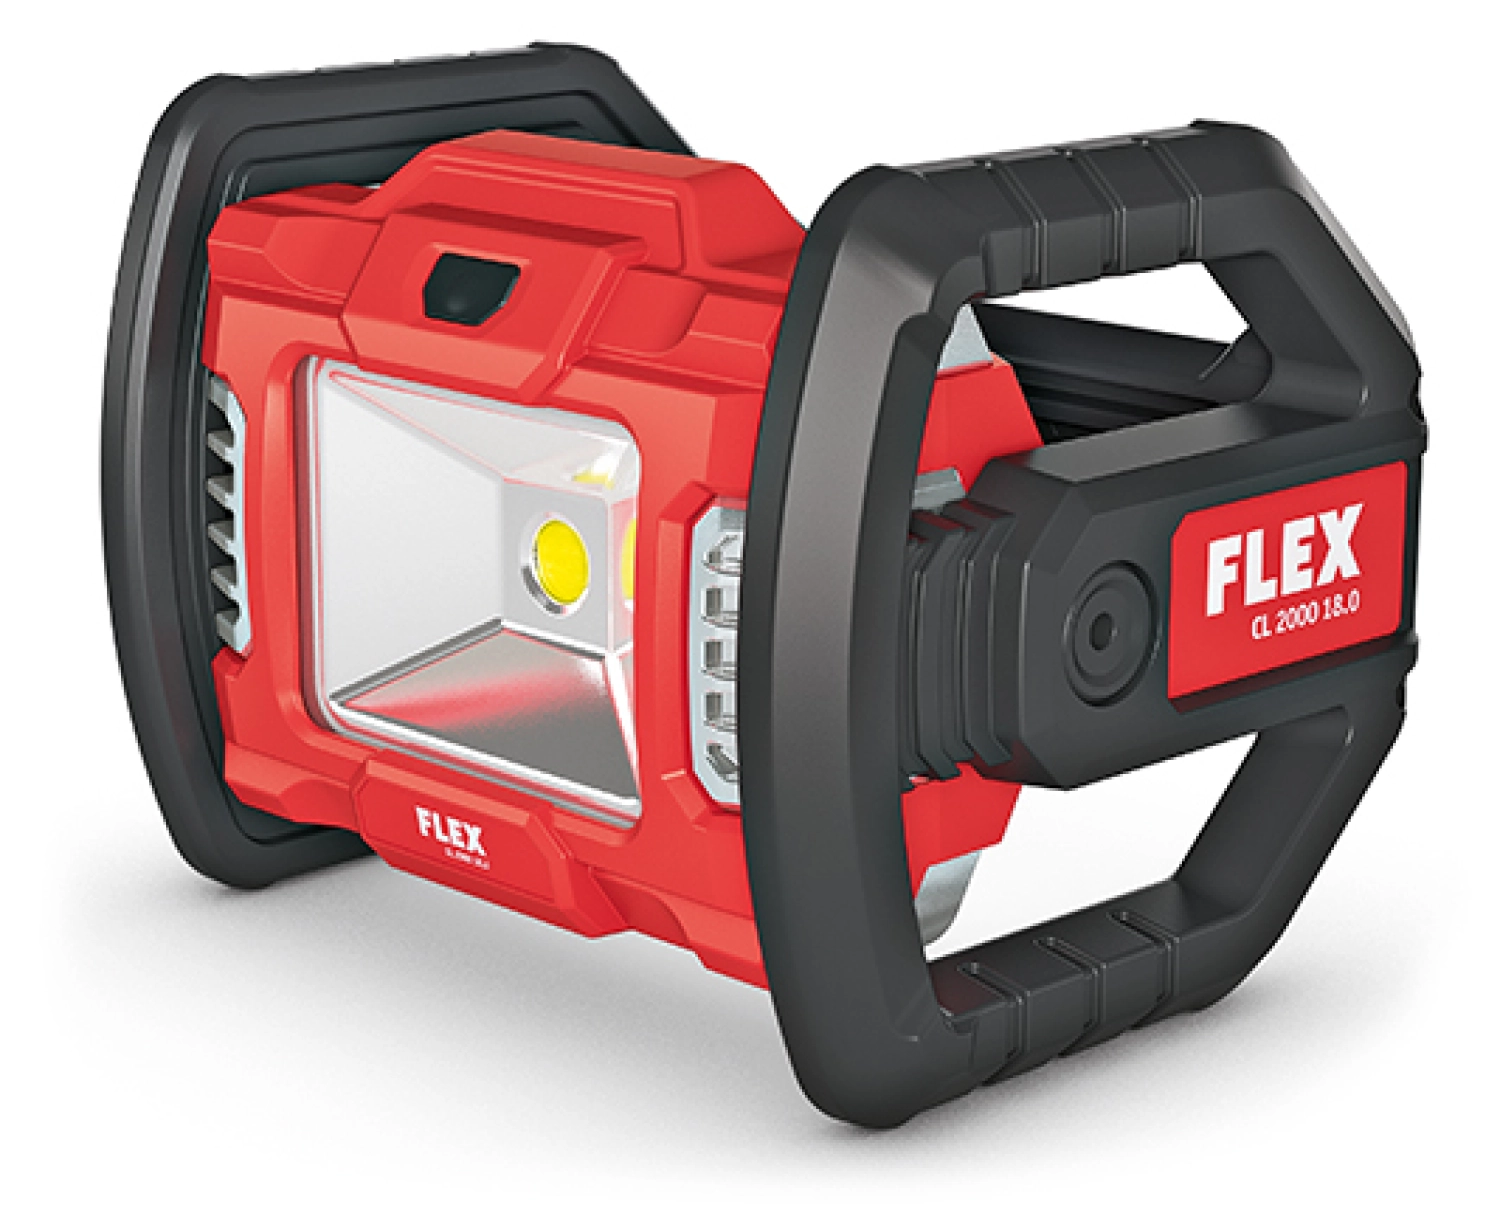 Flex CL 2000 18.0 18V Li-Ion accu LED bouwlamp body - 200Lm